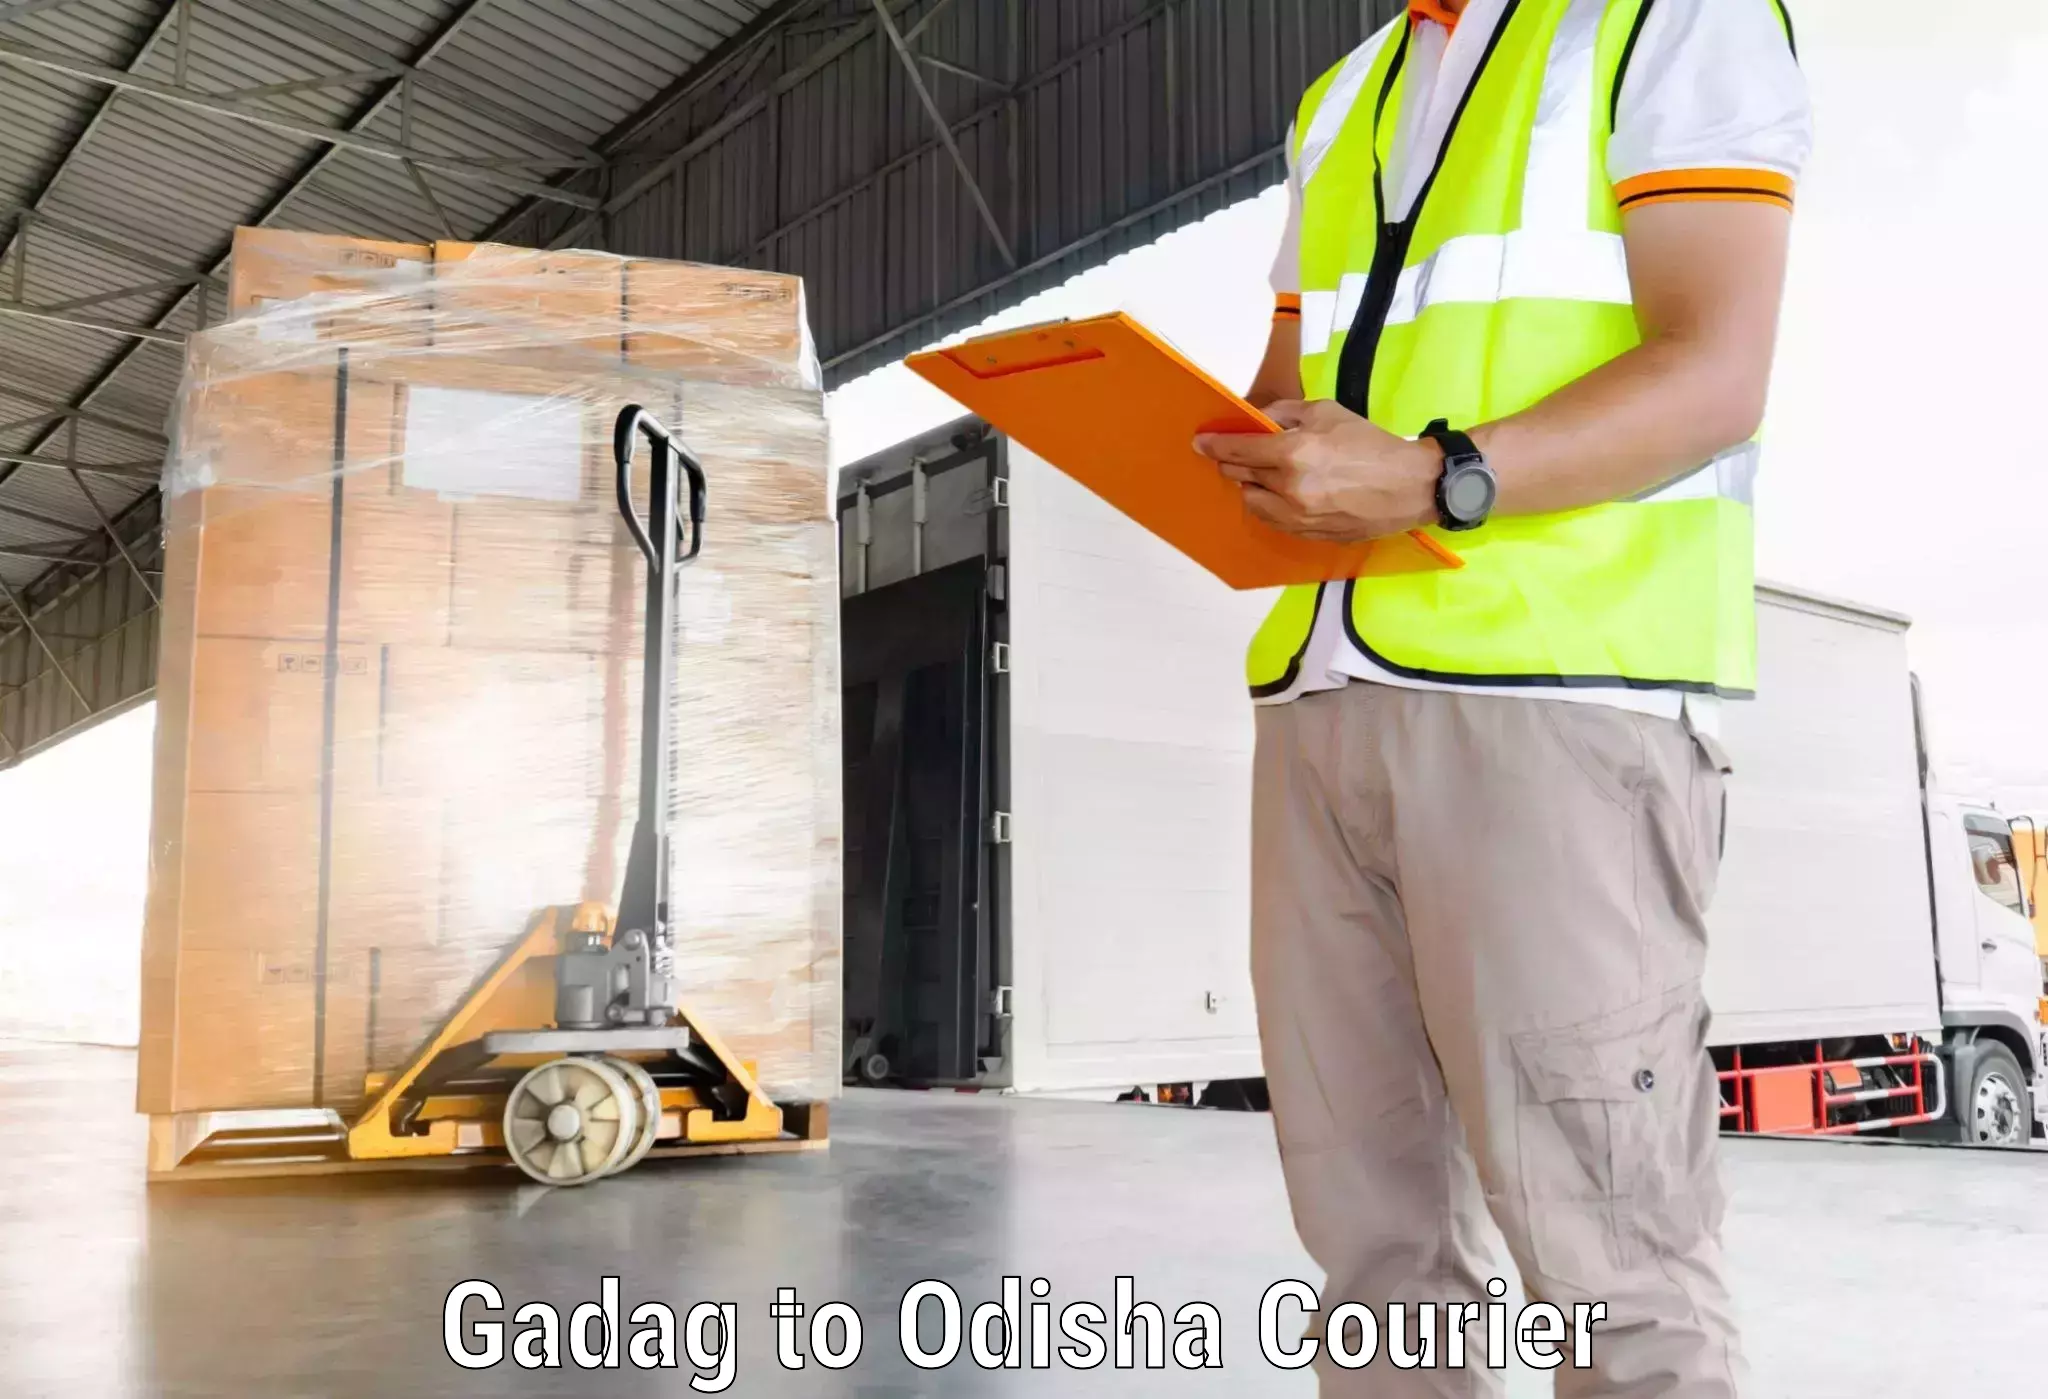 Courier service comparison Gadag to Dukura